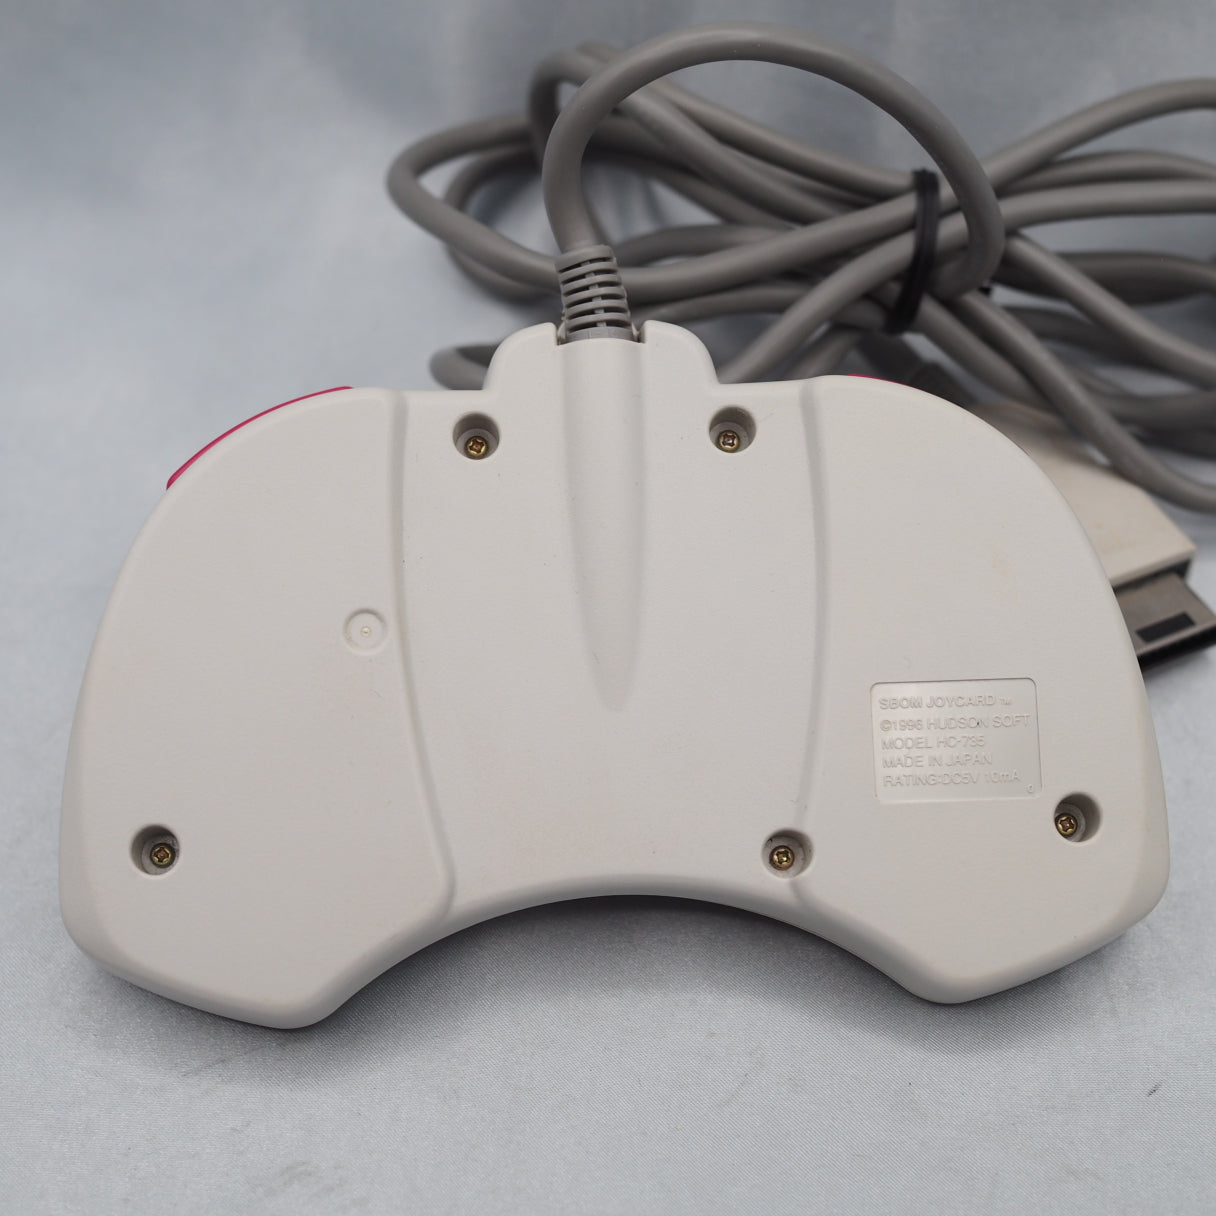 SBOM JOYCARD Controller HC-735 Bomberman Control Pad